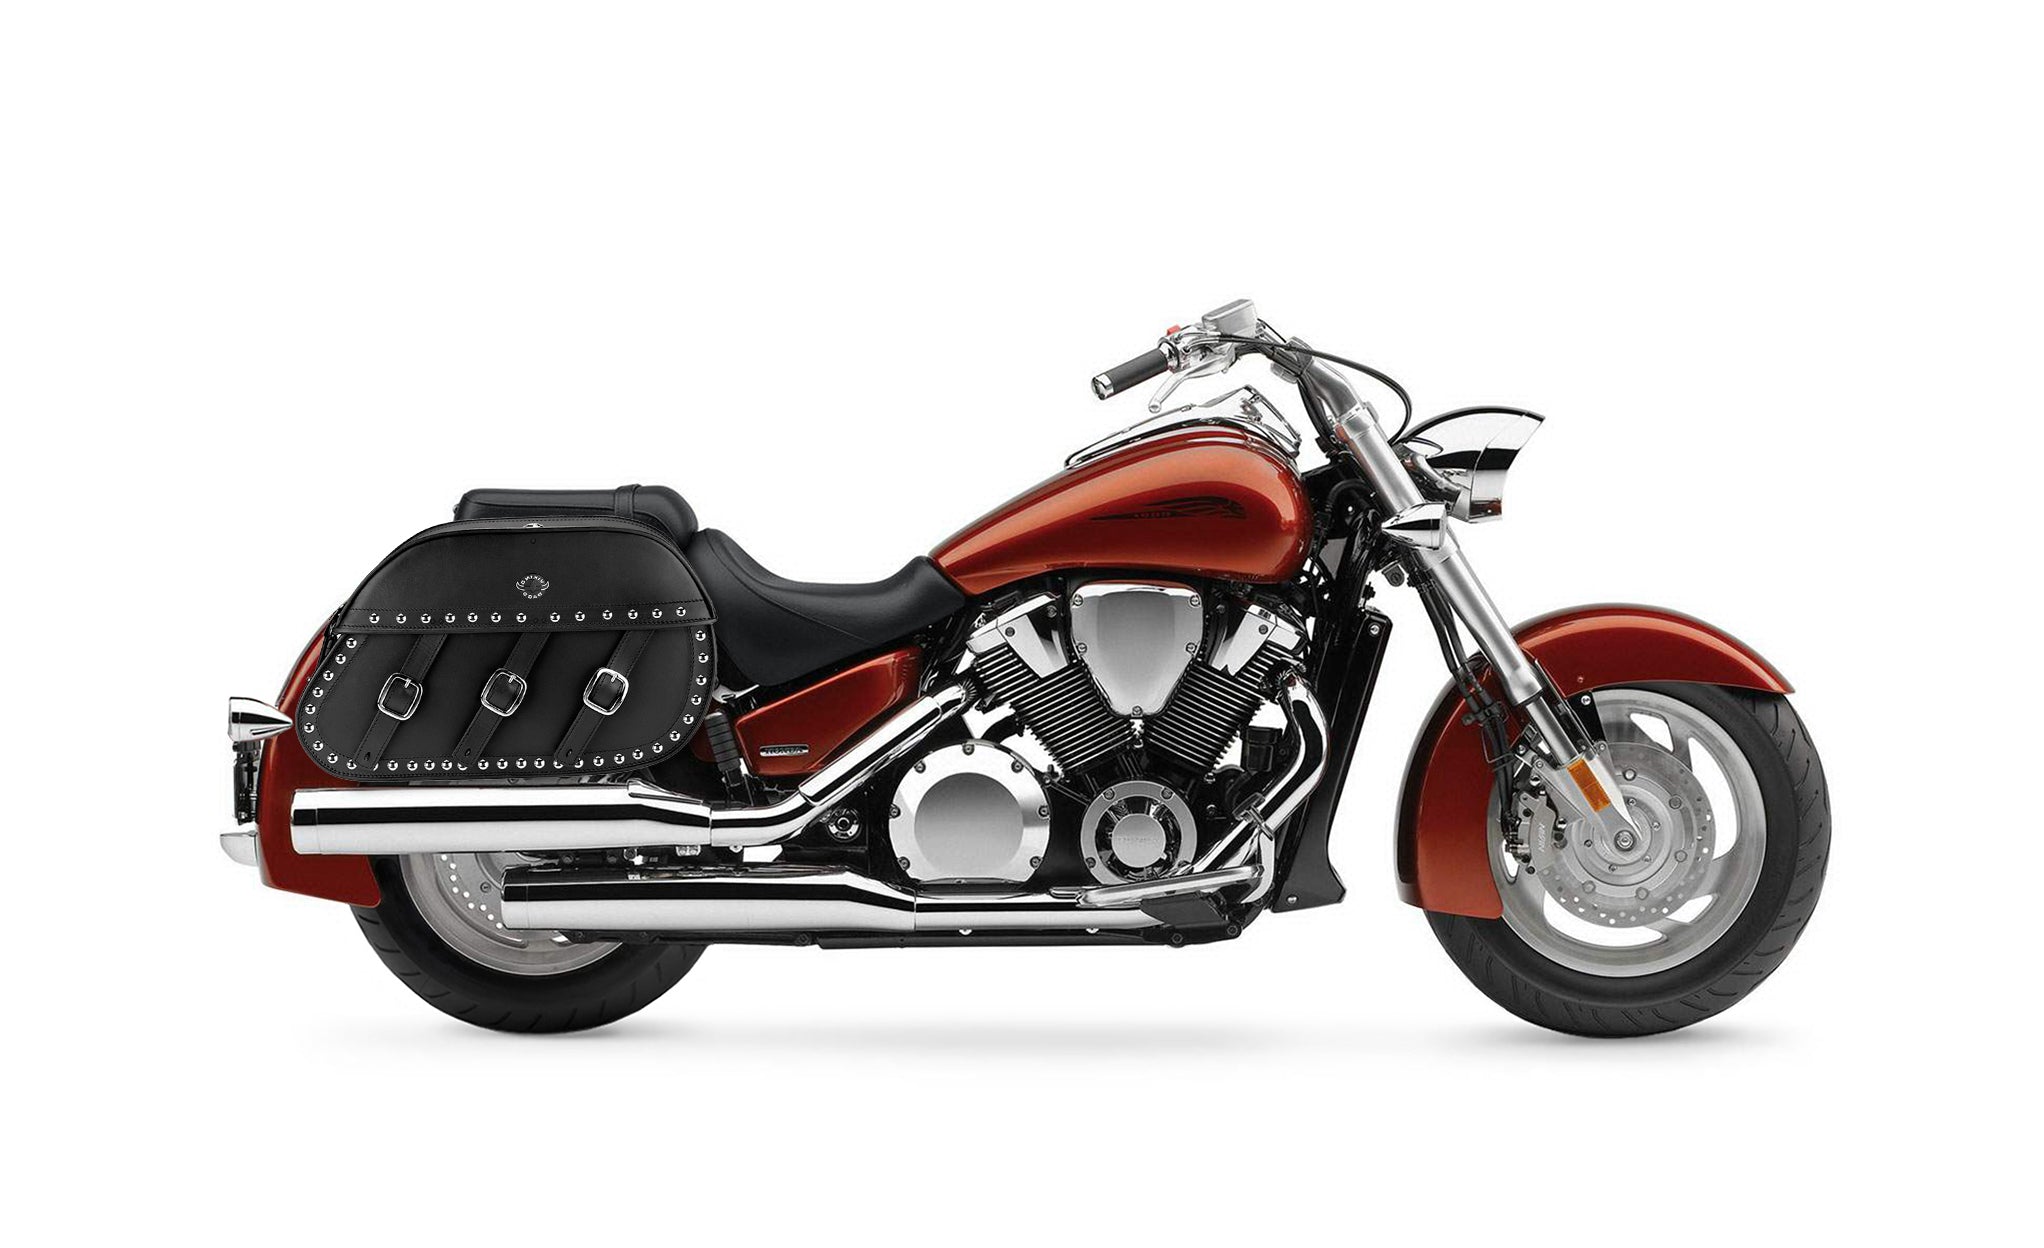 34L - Trianon Extra Large Honda VTX 1800 N Studded Leather Motorcycle Saddlebags on Bike Photo @expand